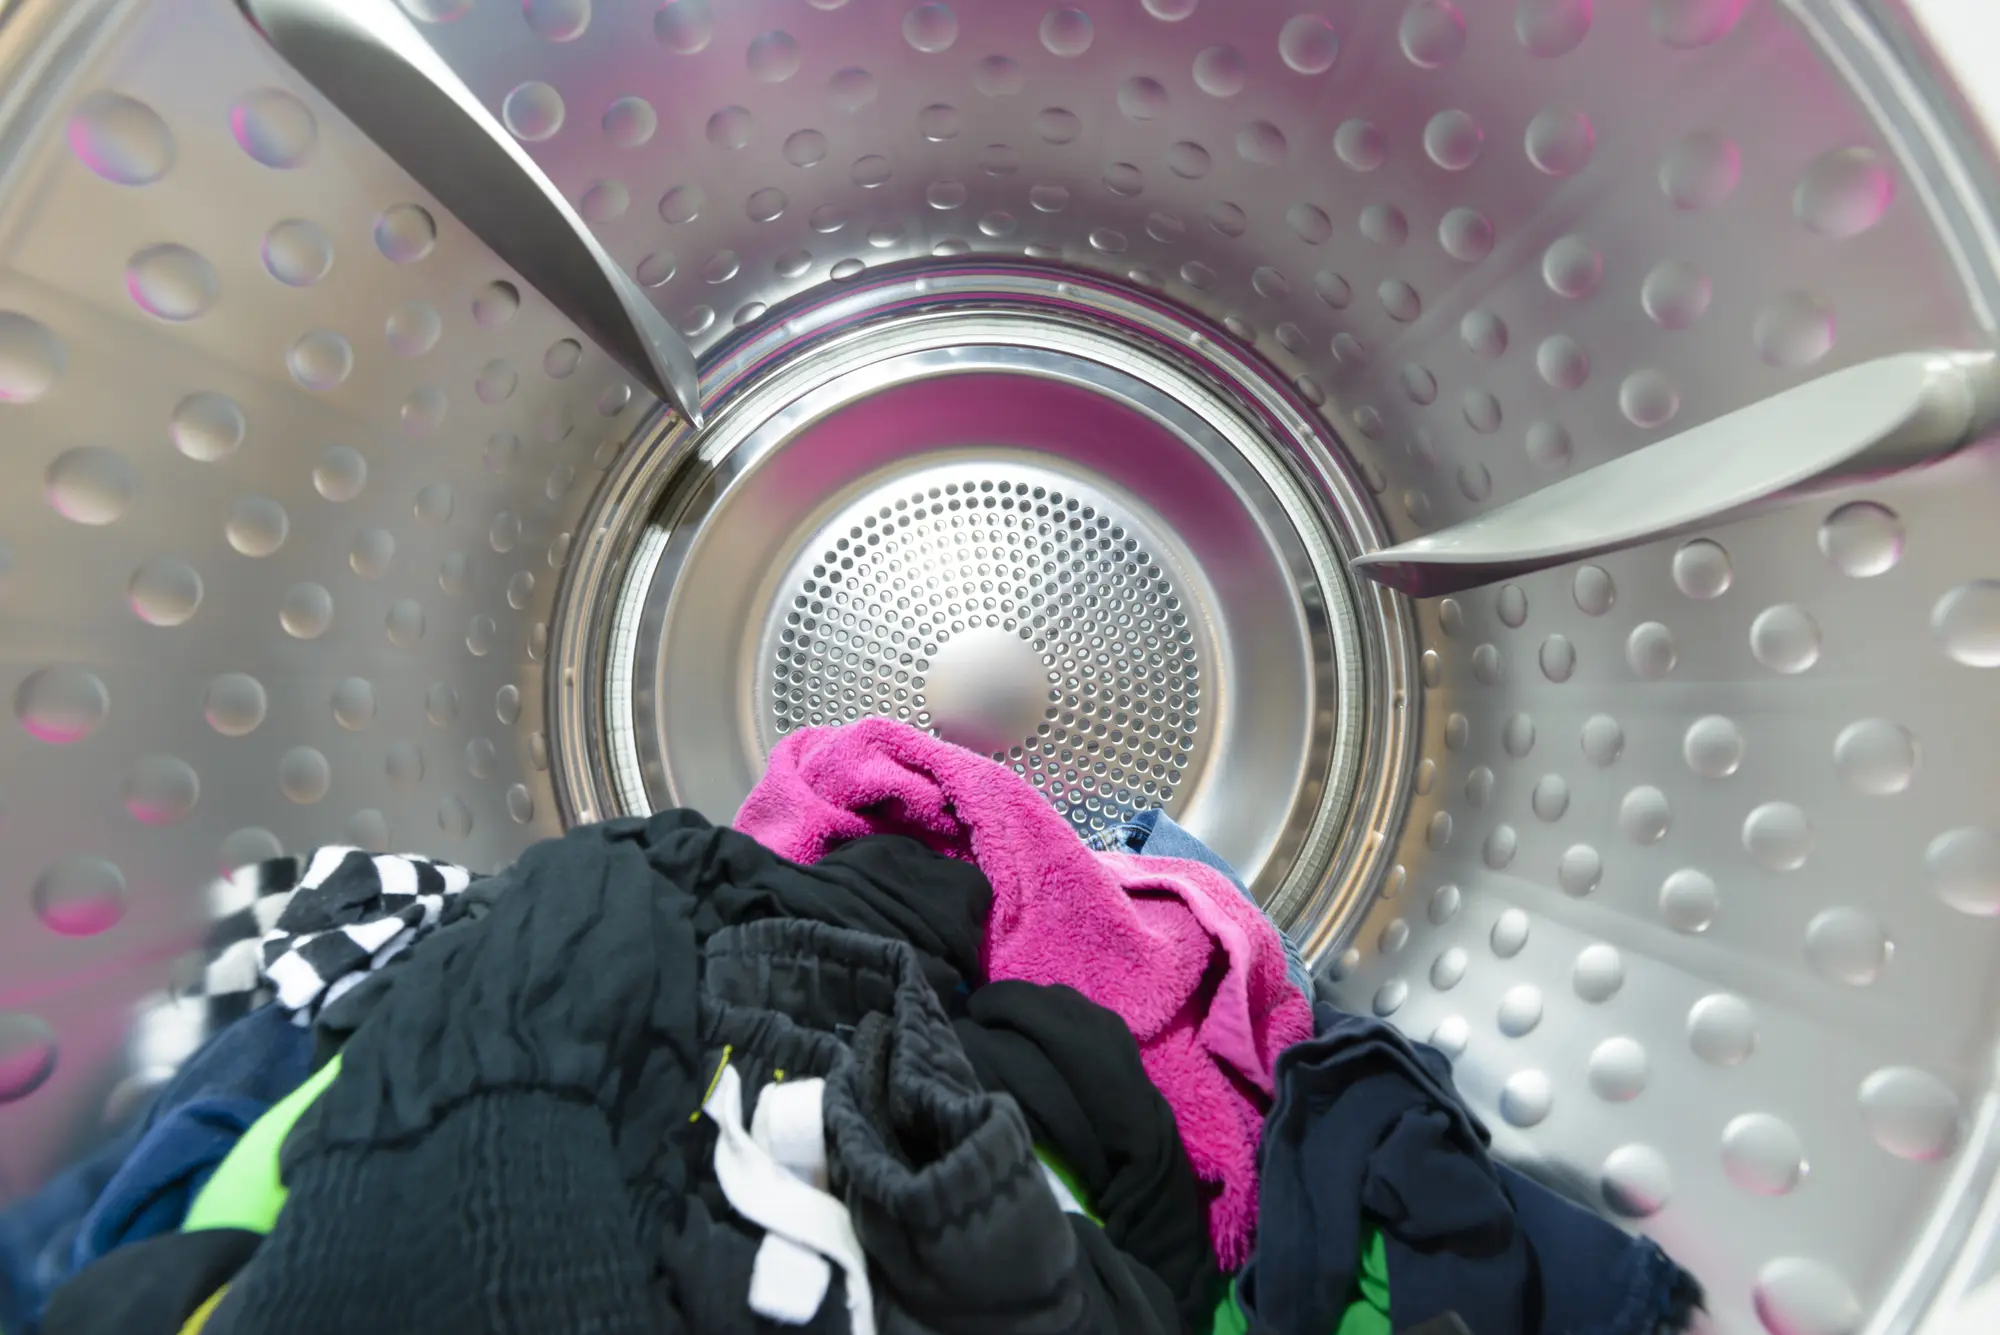 Heat pump clothes dryers save energy